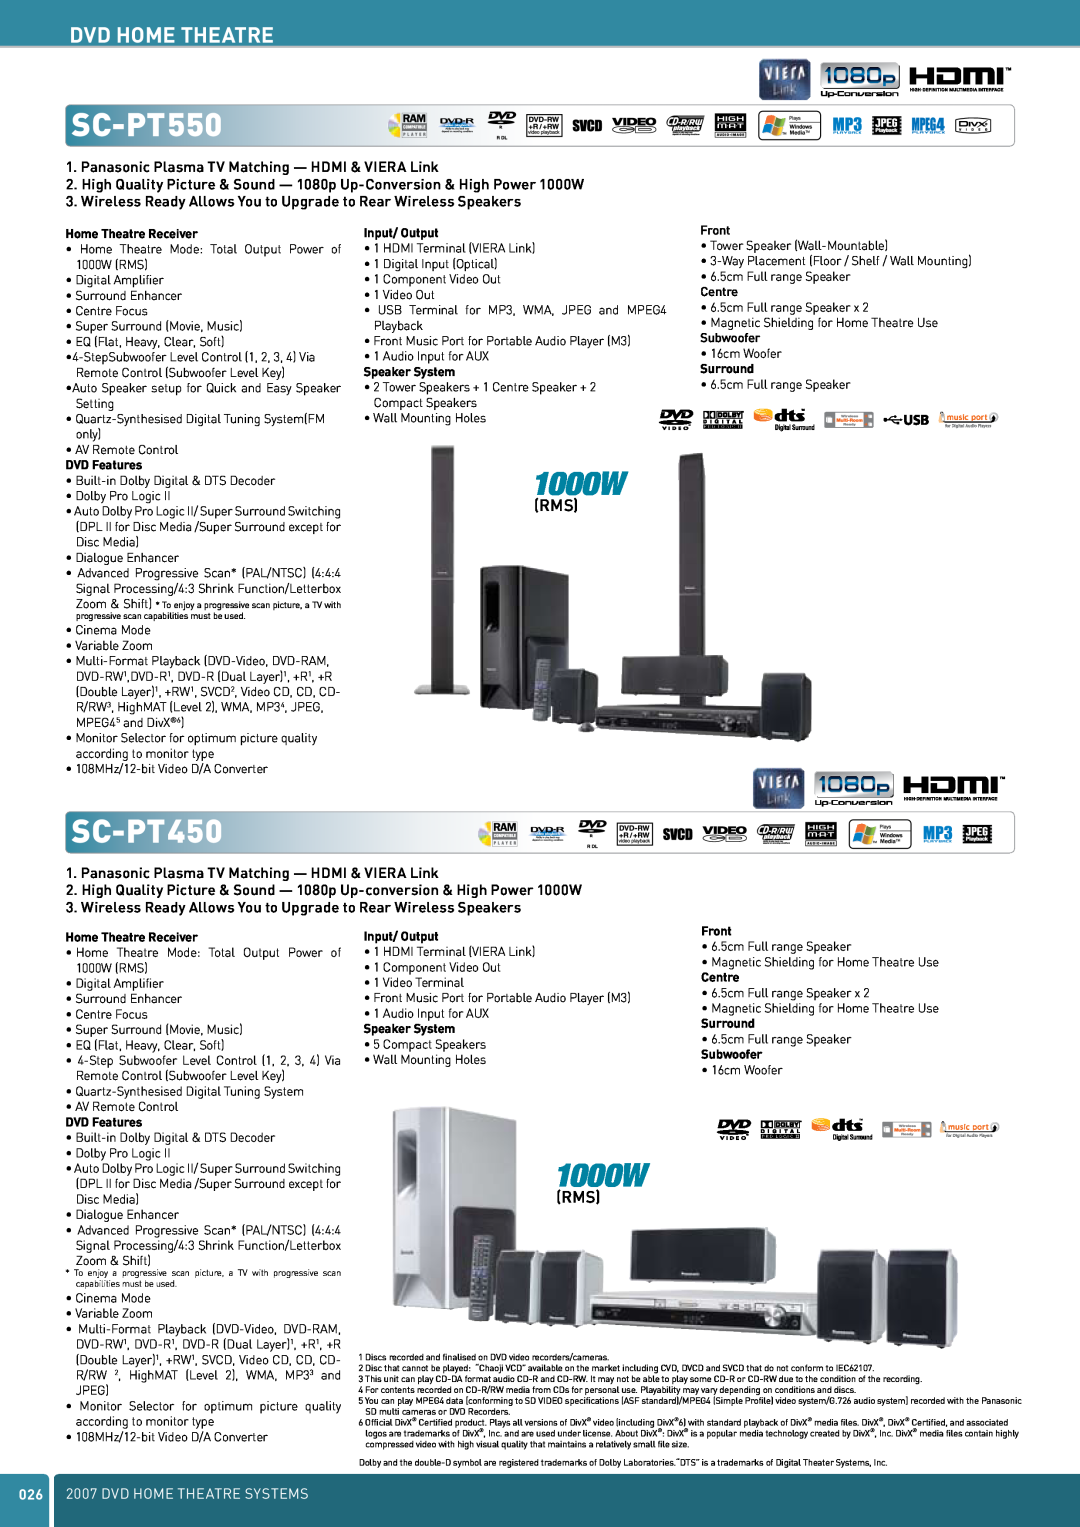 Panasonic DVD Home Theatre System manual SC-PT550, 1000W, SC-PT450, Dvd Home Theatre 